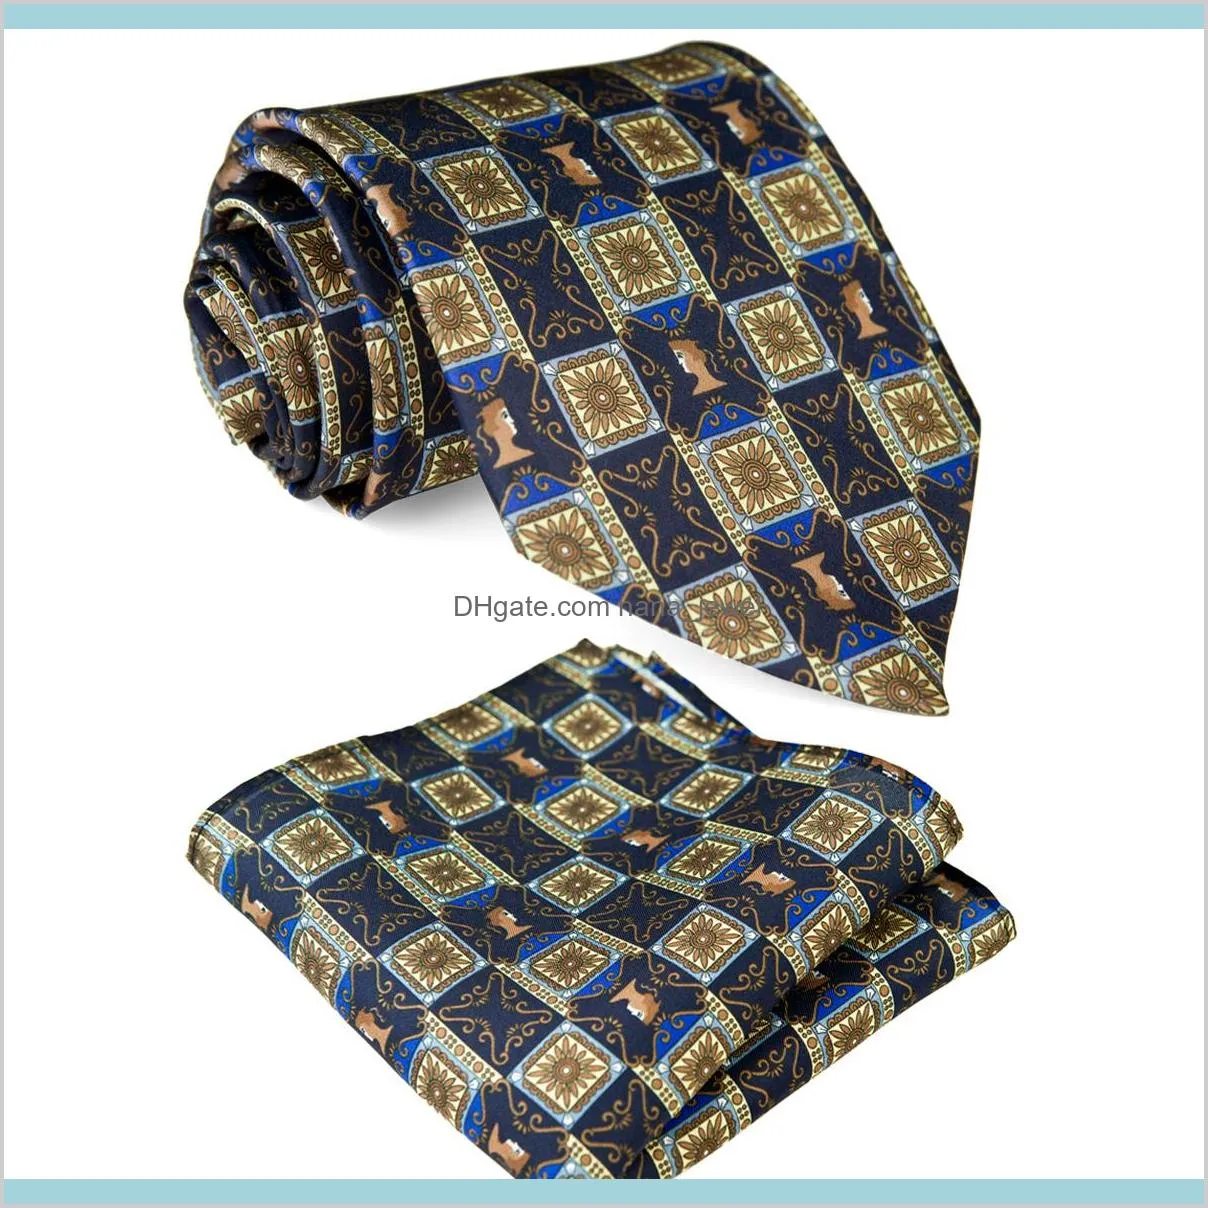 Hals-Accessoires, bedruckte Vintage-Krawatten, Blumenmuster, mehrfarbig, 100 % Seide, Herren-Krawatten, bedruckte Krawatten-Sets, 10 cm, Modemarke 251B